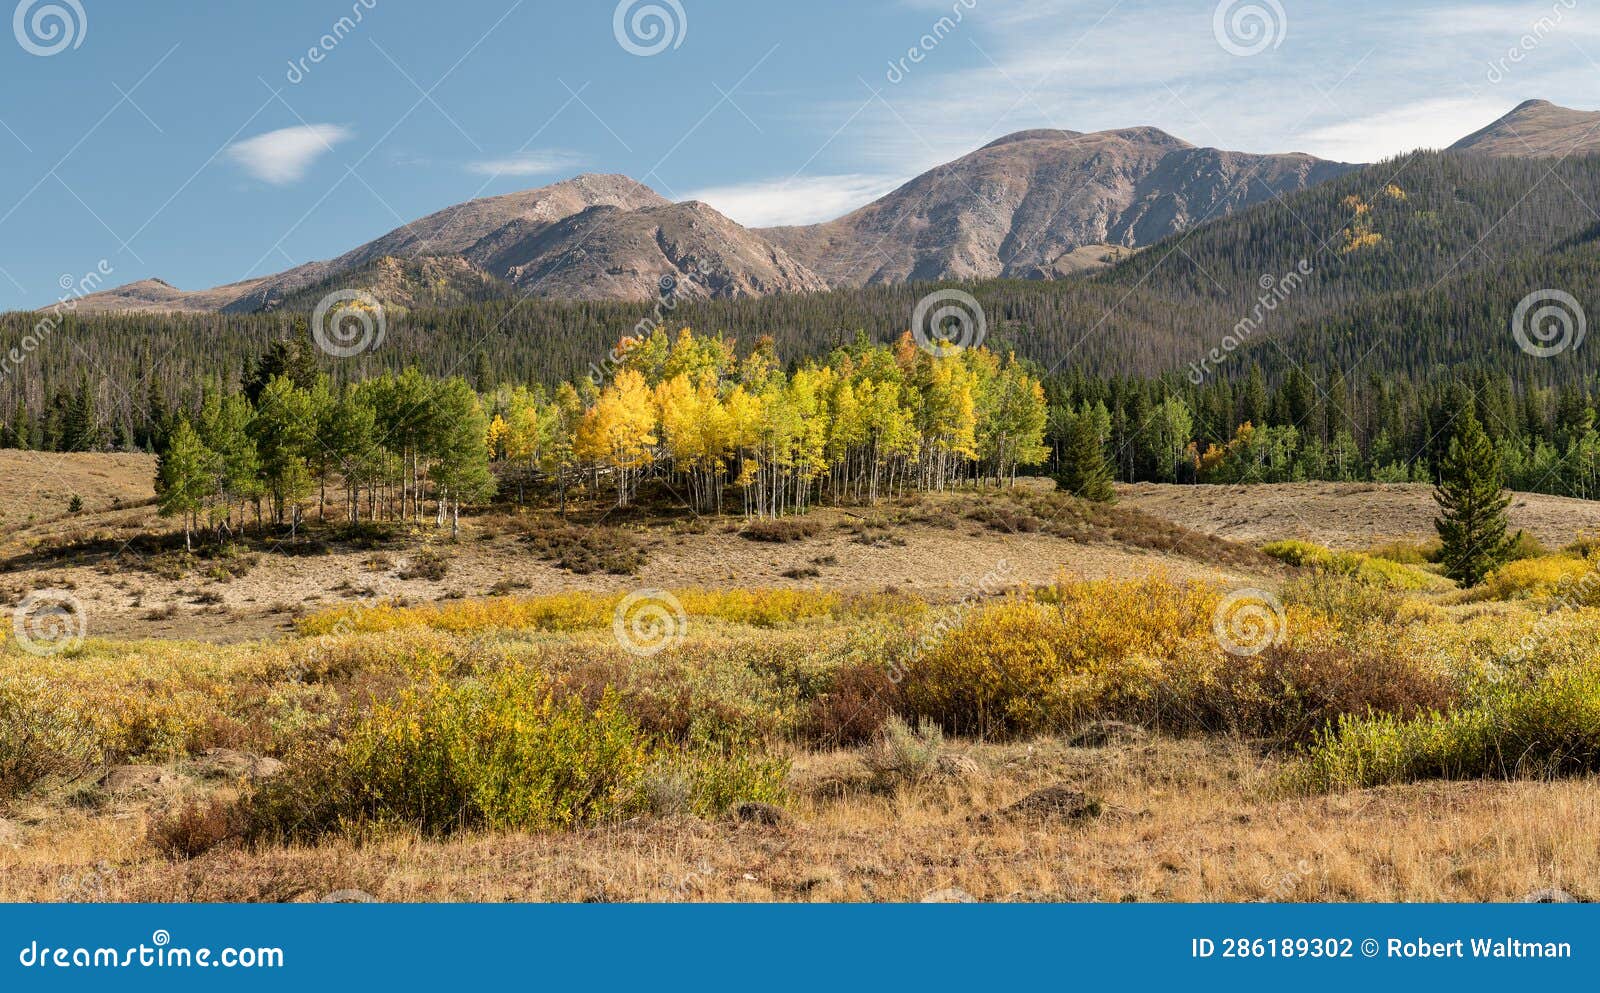 fall in the rawah mountain range of northern colorado.